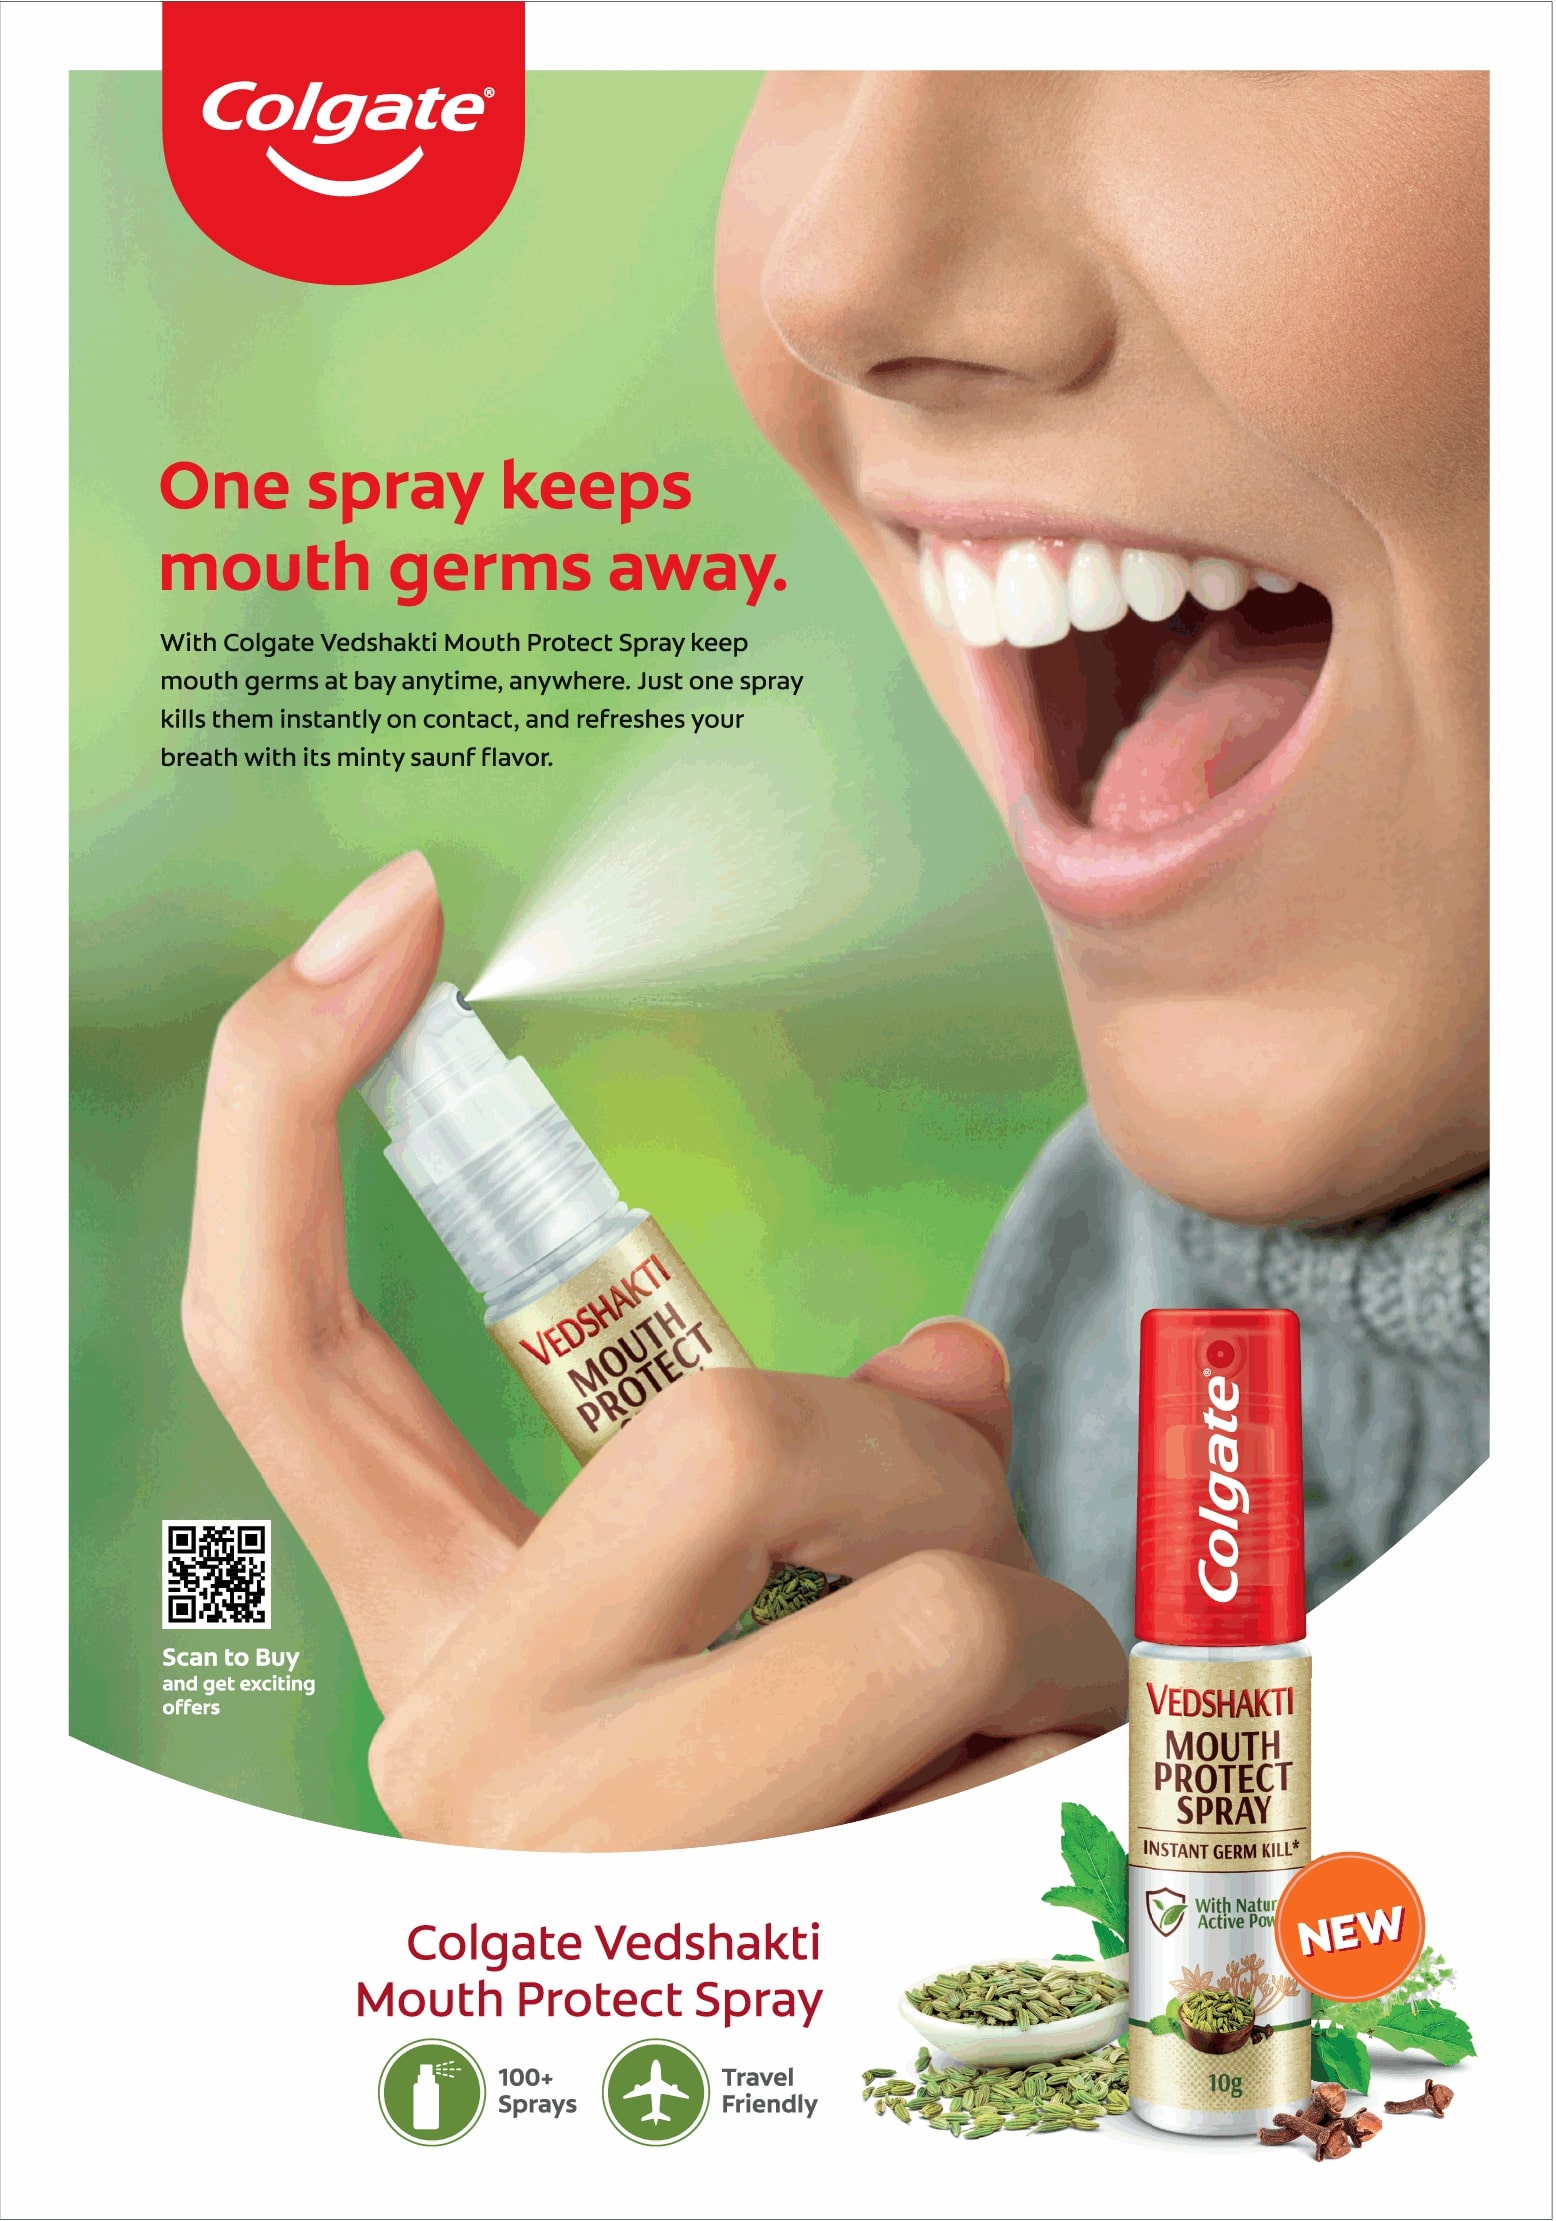 colgate-vedshakti-mouth-protect-spray-instant-germ-kill-ad-toi-delhi-27-12-2020